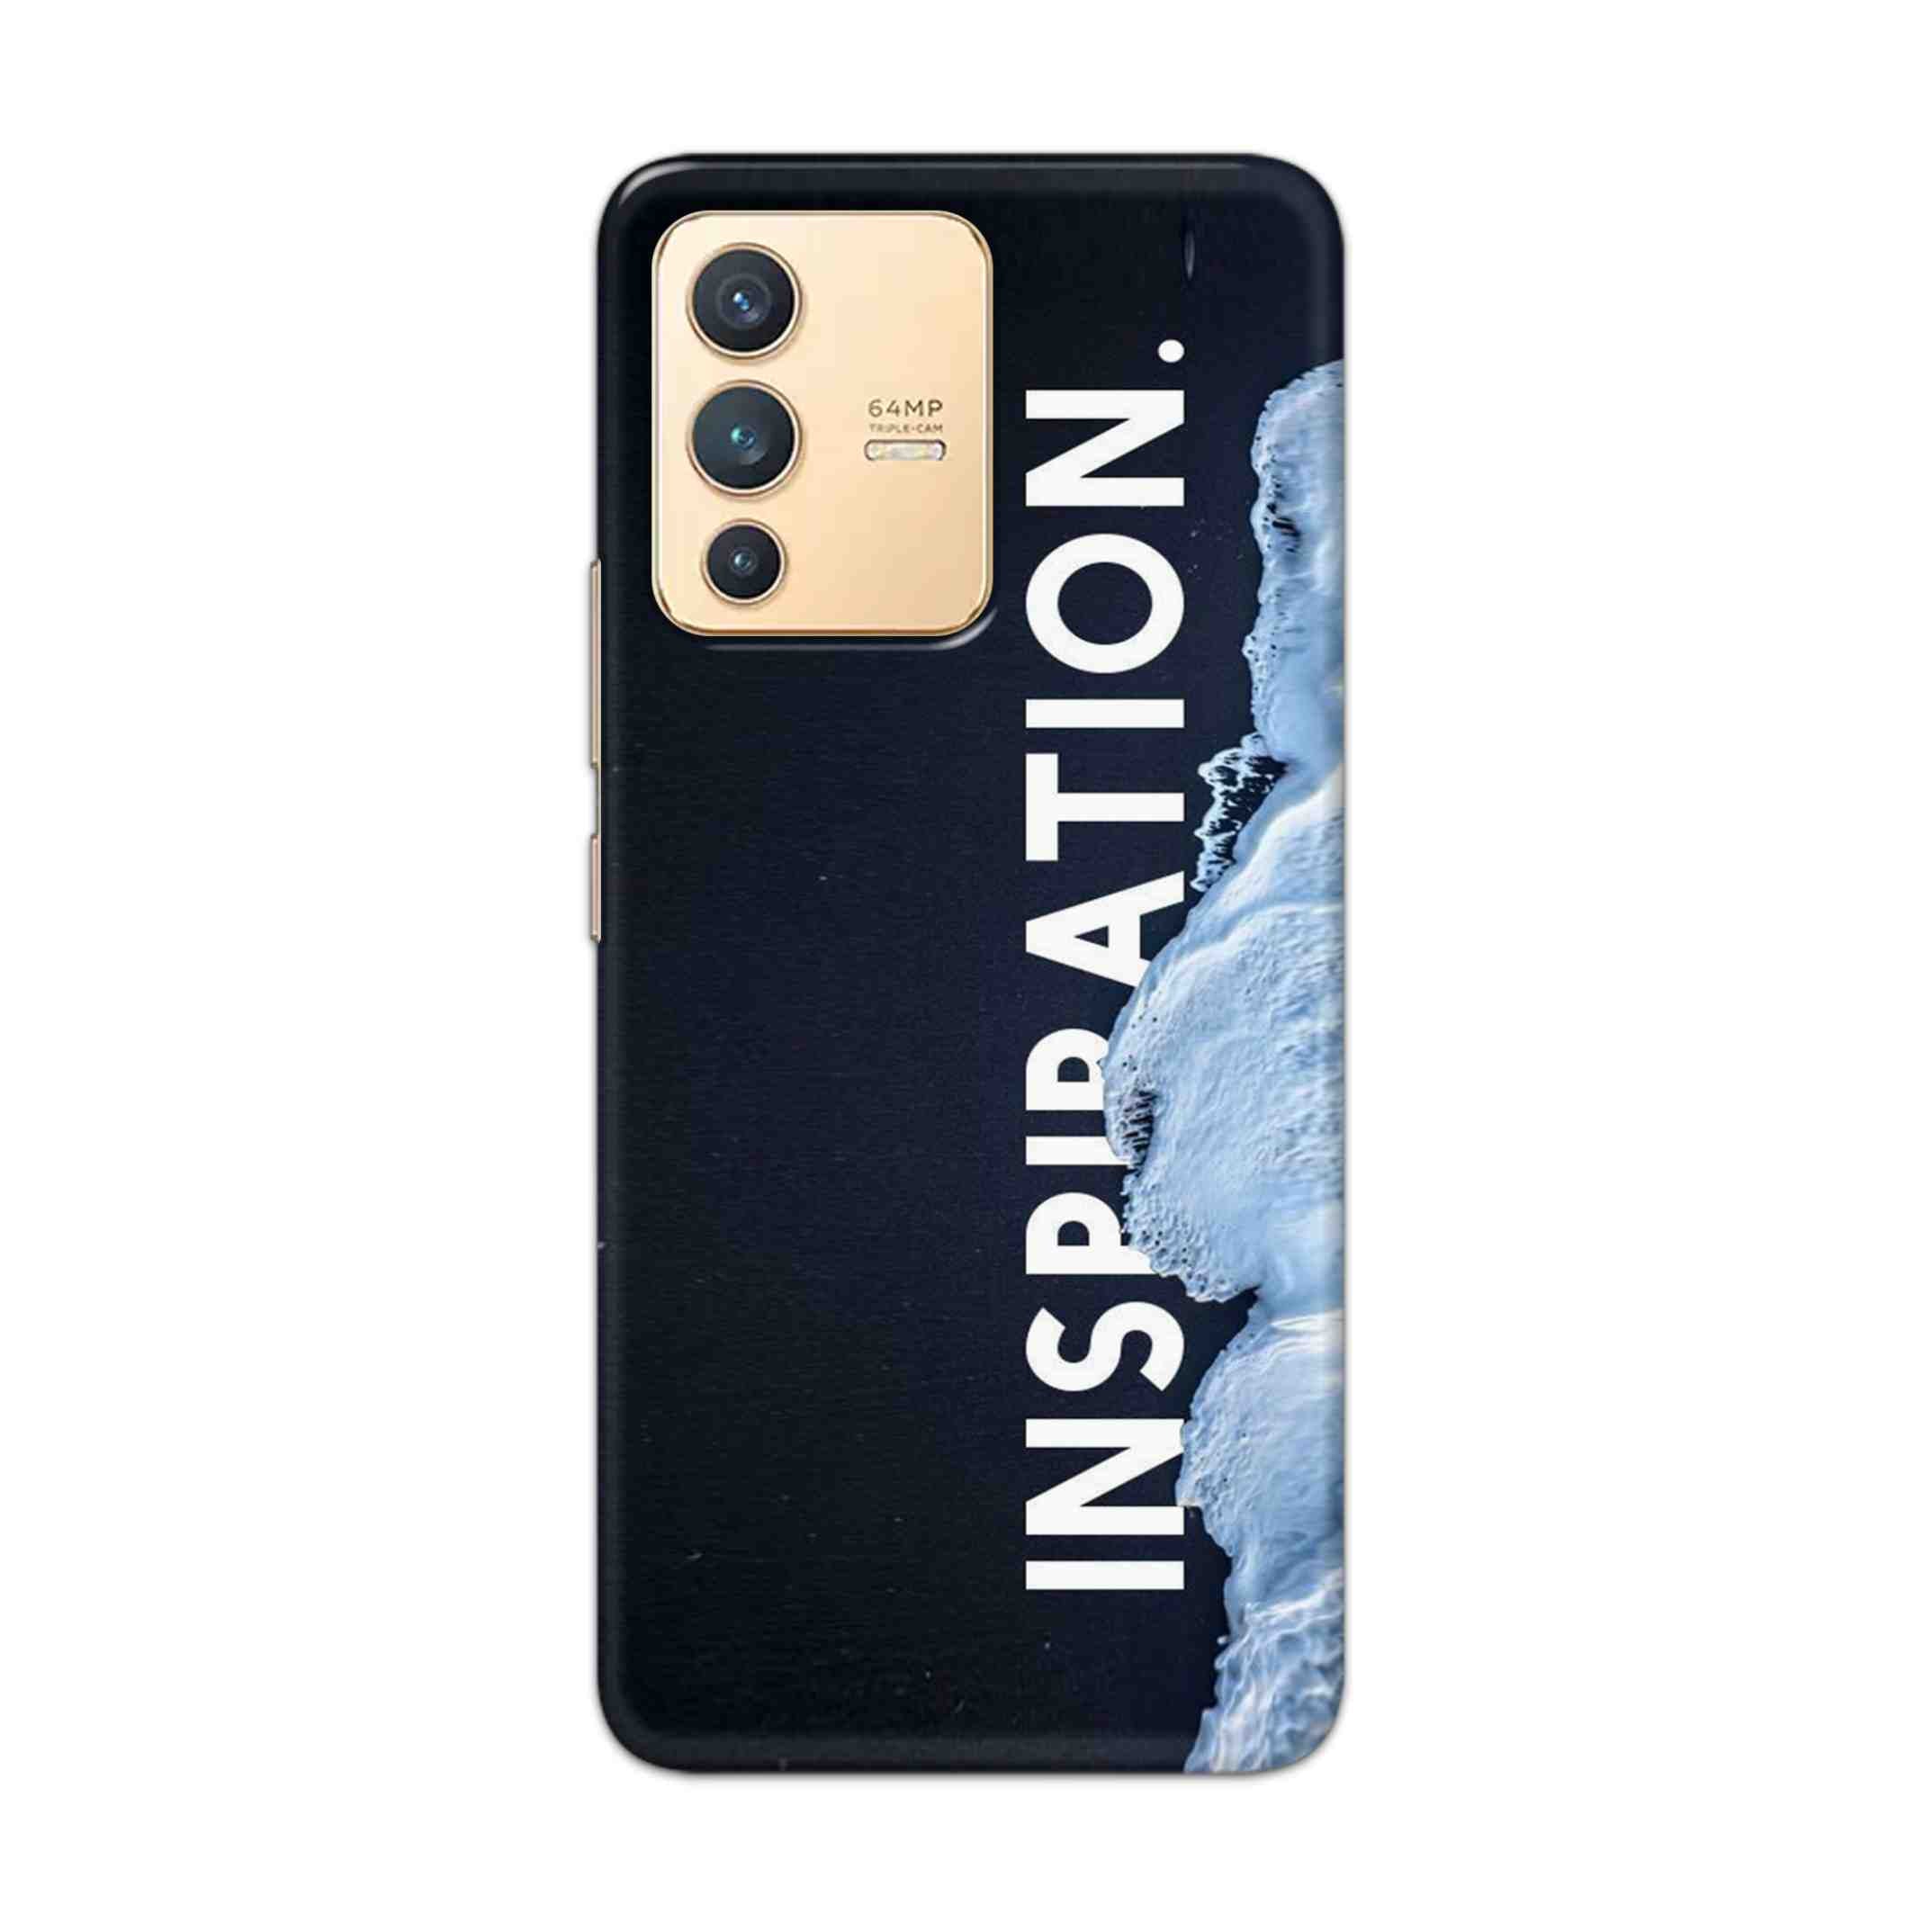 Buy Inspiration Hard Back Mobile Phone Case Cover For Vivo V23 Online